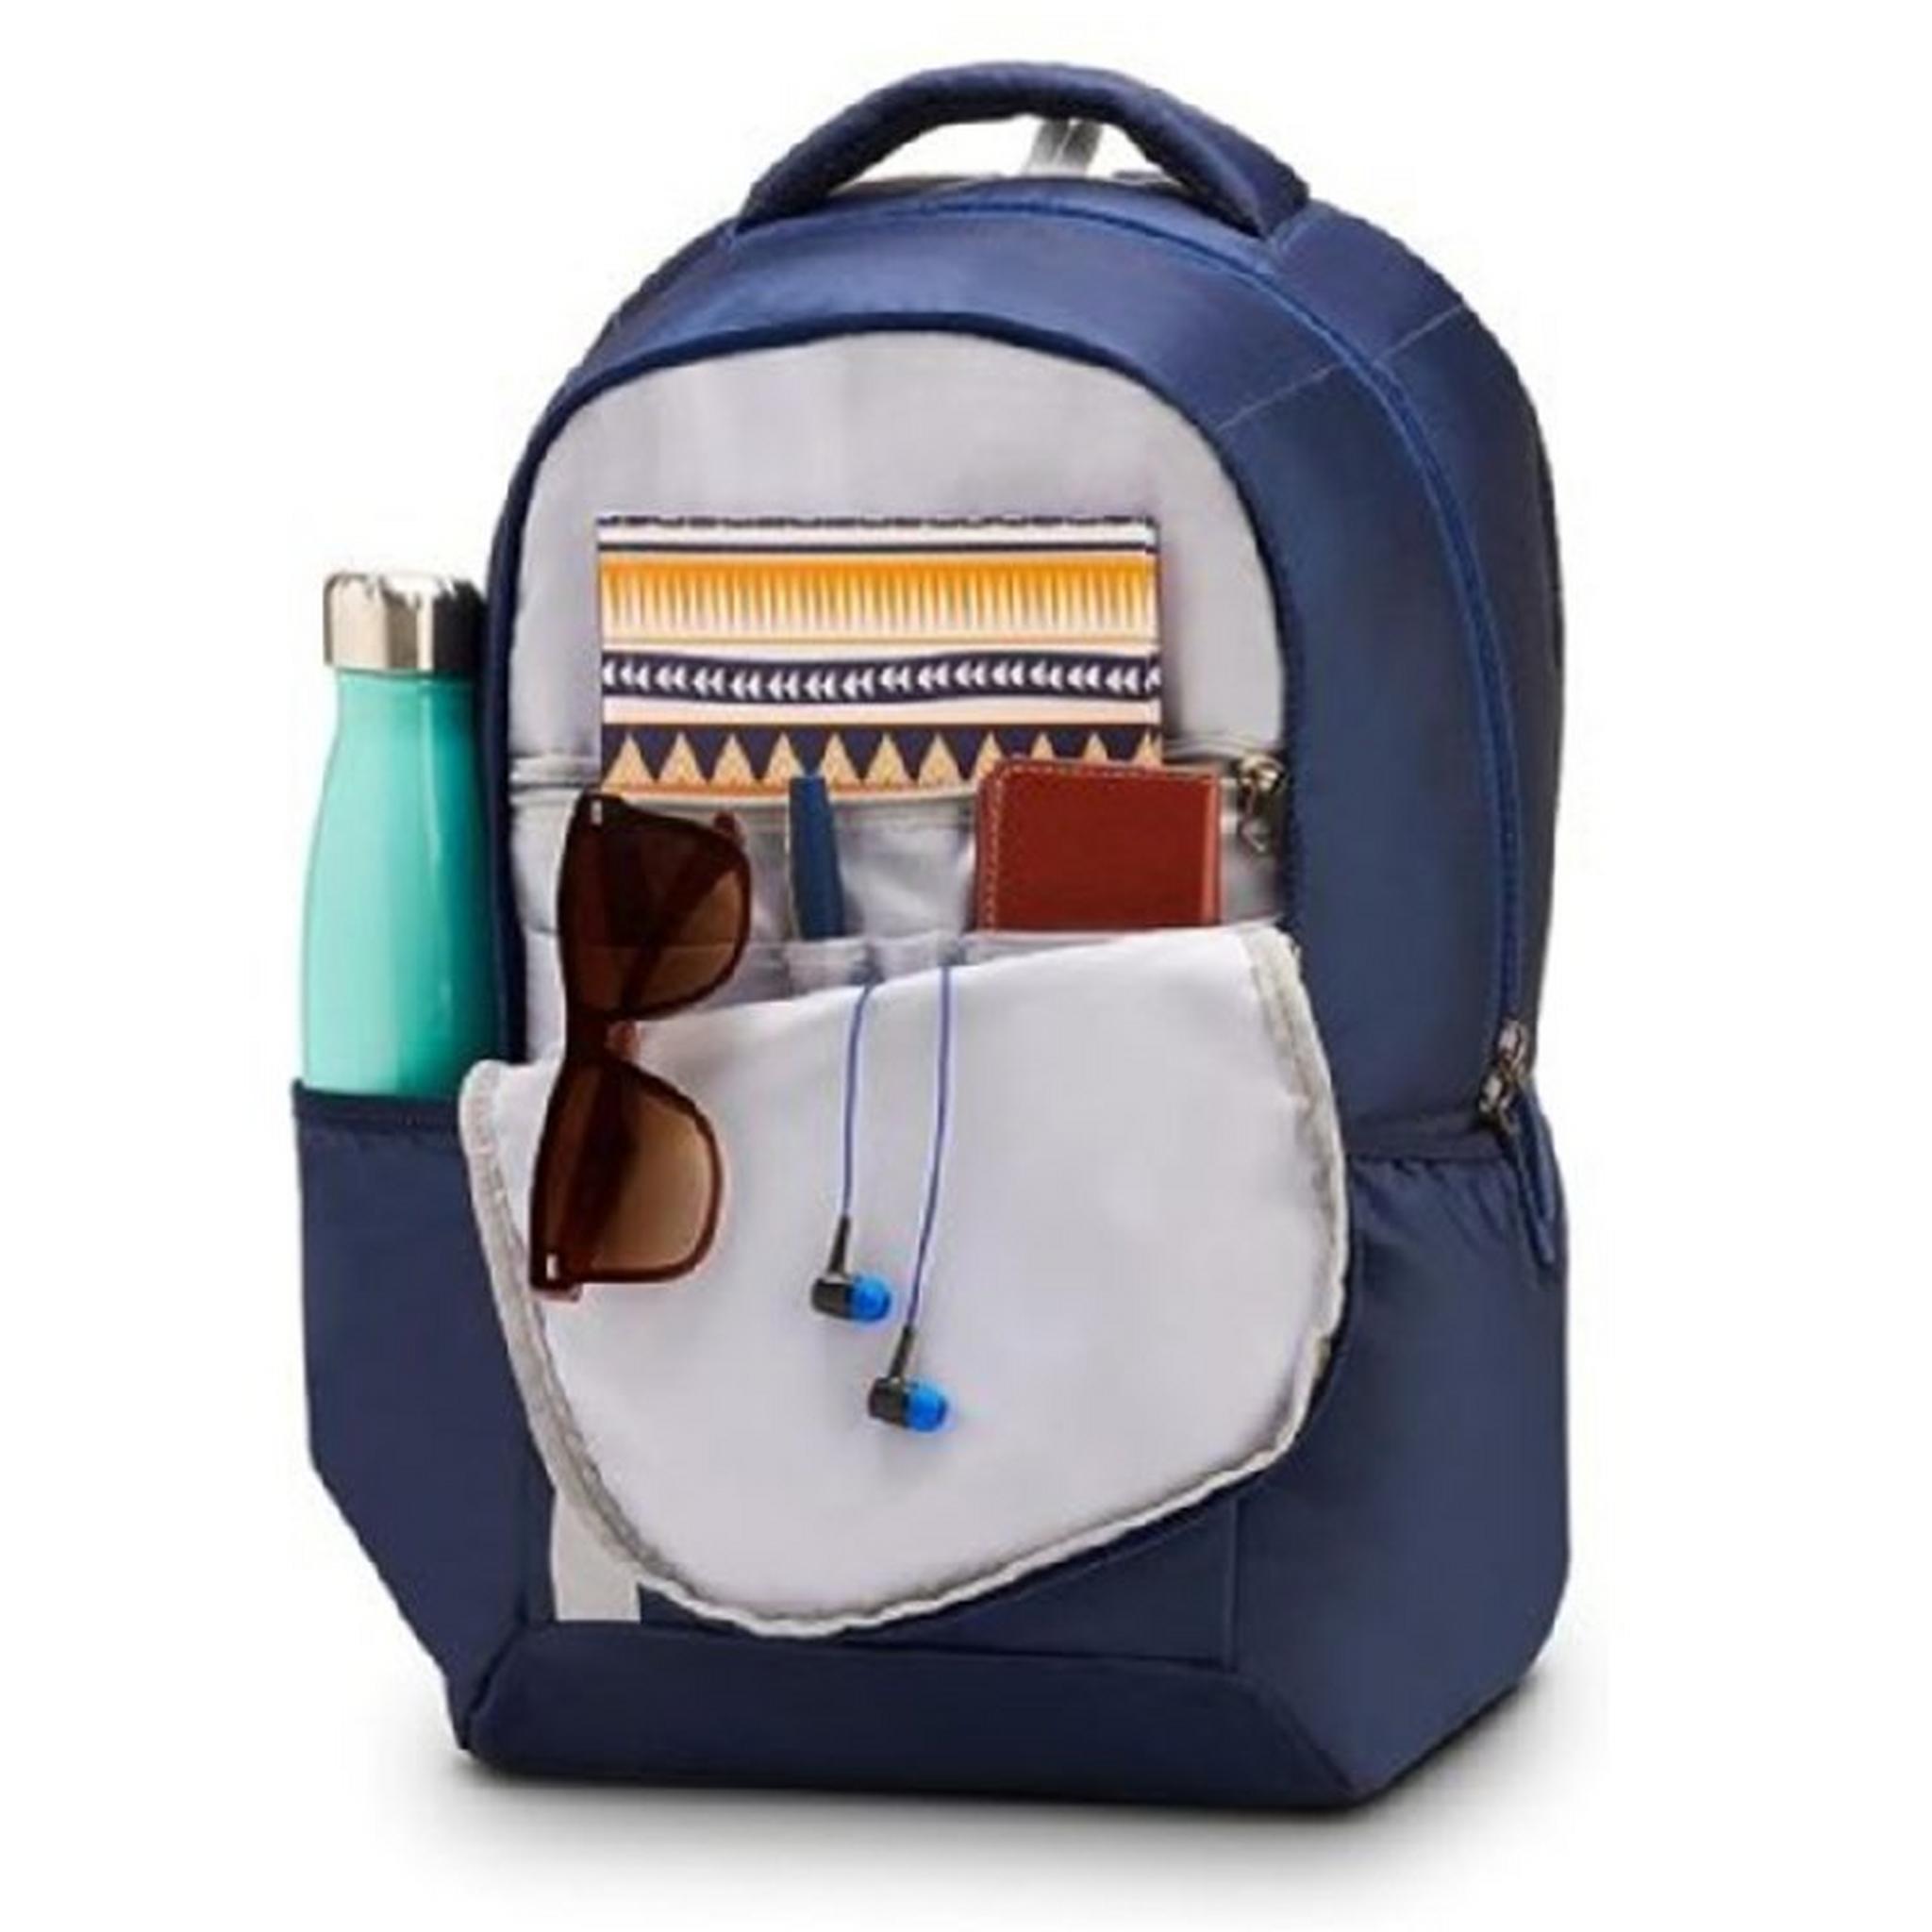 American Tourister Slate 2.0 Laptop Backpack, LU6X41002 - Navy